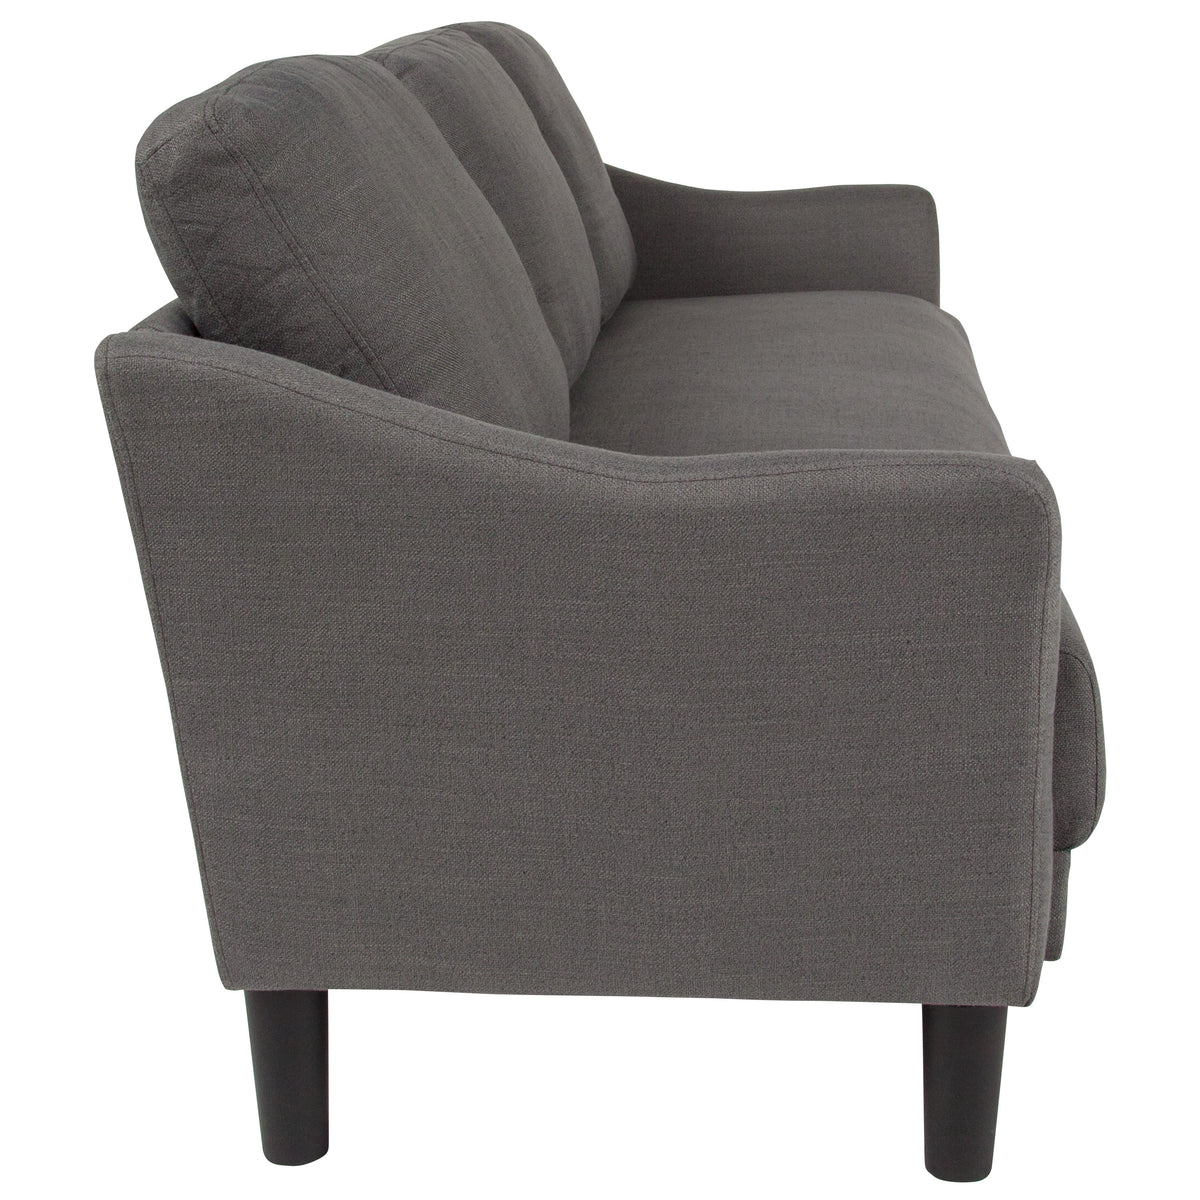 Dark Gray Fabric |#| Upholstered Living Room Sofa with Single Cushion Seat in Dark Gray Fabric